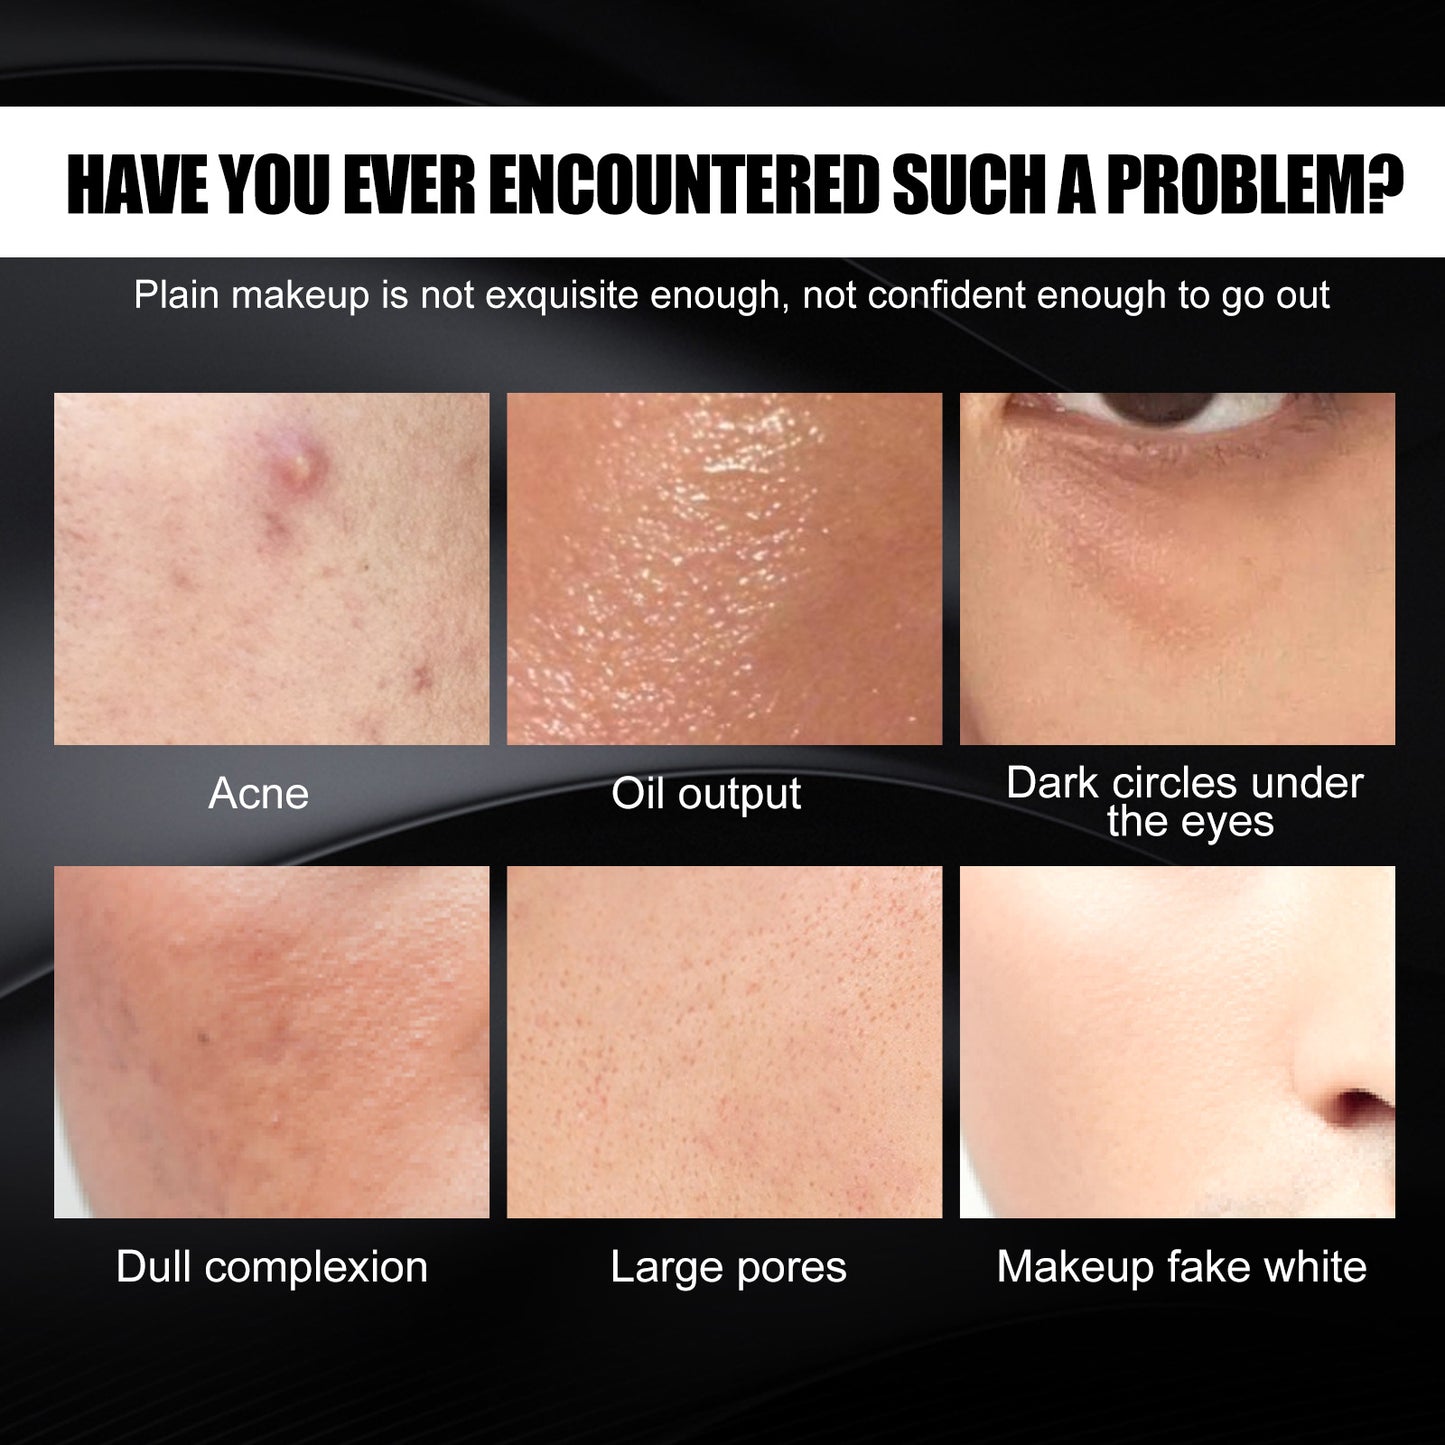 East Moon Men's Face BB Cream Oil-control Men Lift Anti Cream Care Whitening Facial Pores Cream Shrink Firming Day Acne Moisturizing(50g)